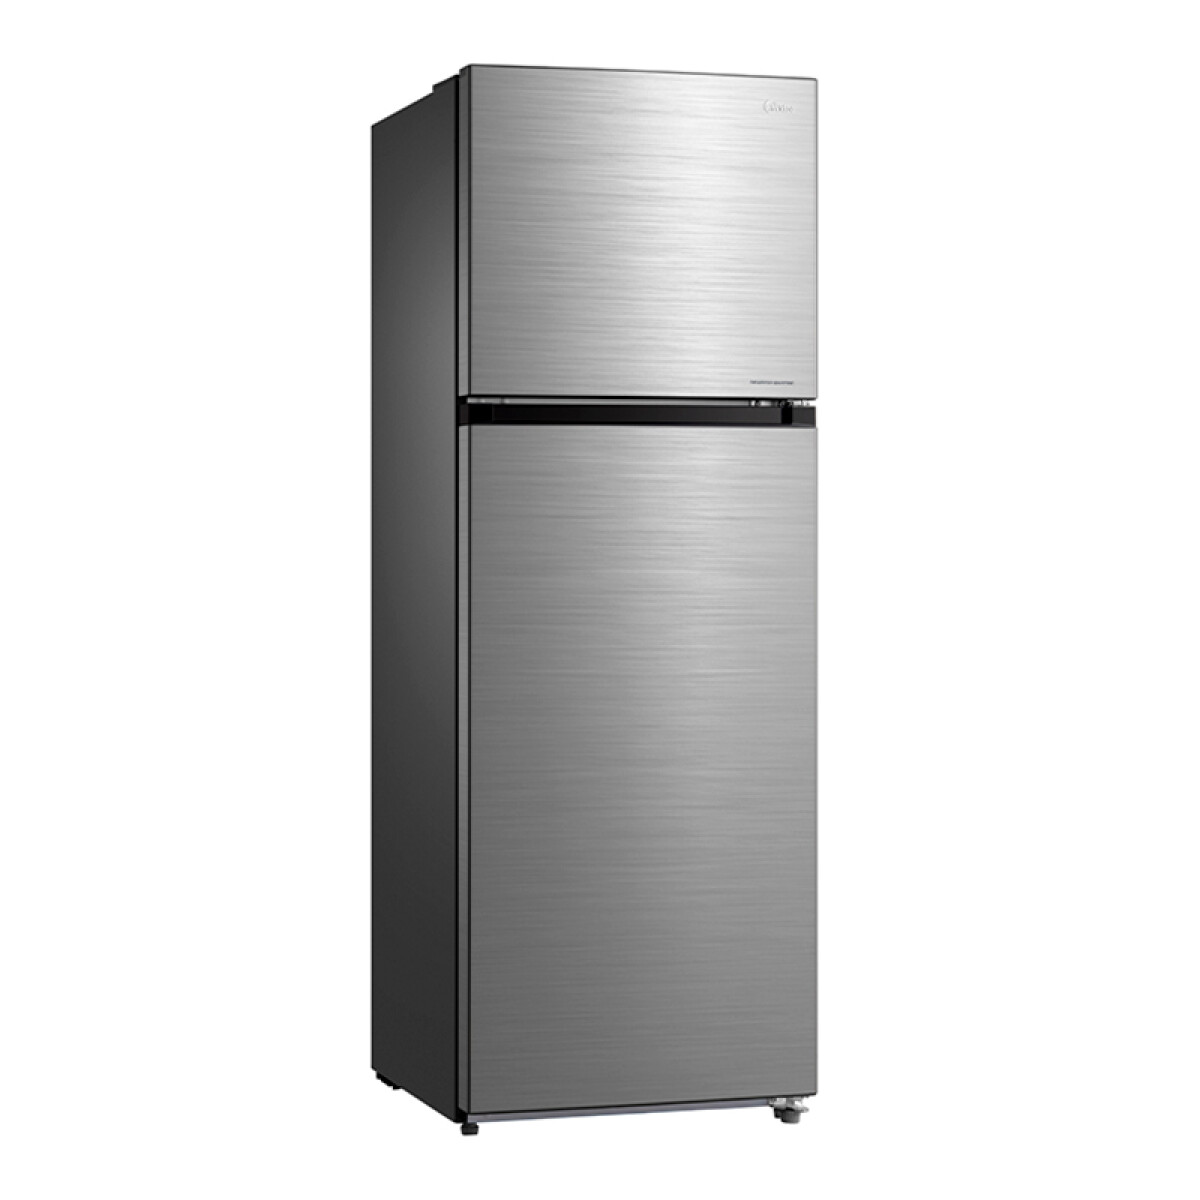 Refrigerador Midea 368 lts Inox MDRT489MTR46 